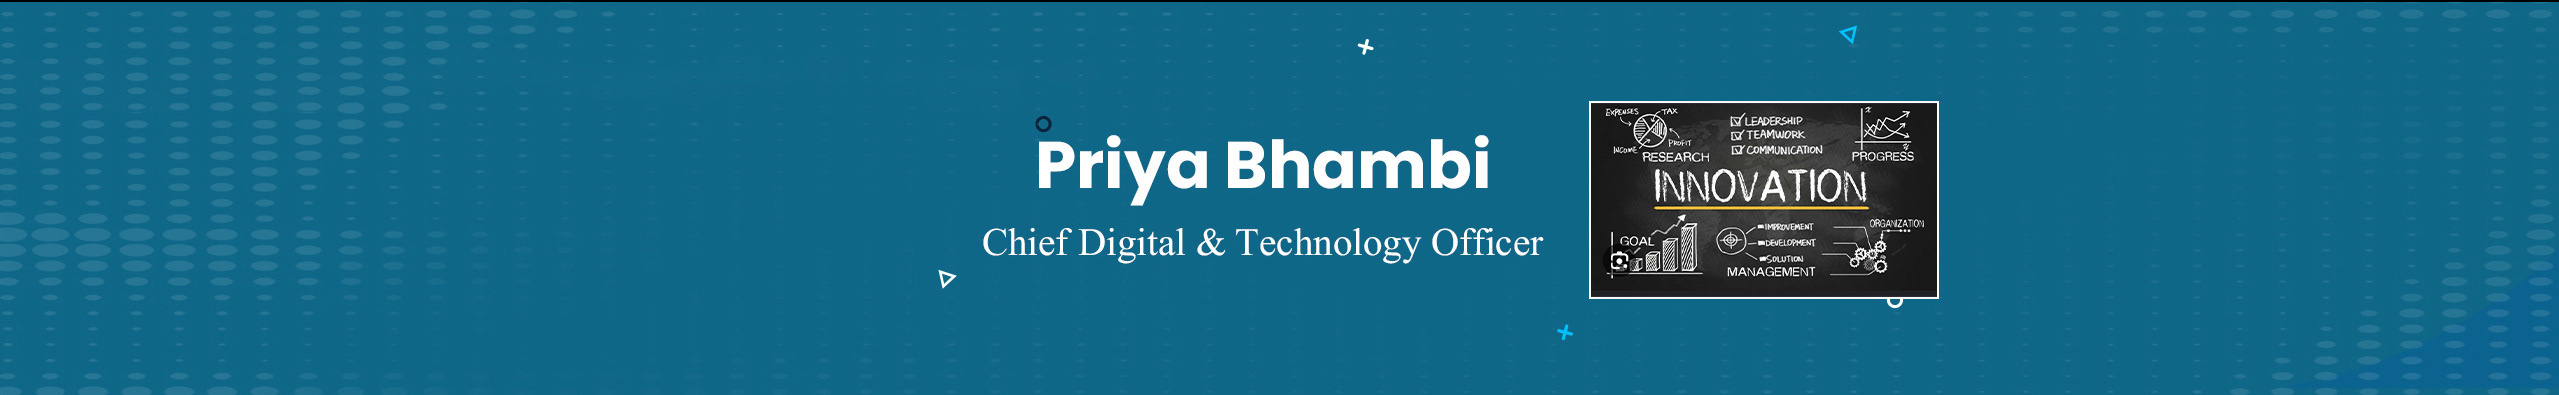 Priya Bhambi のプロファイルバナー